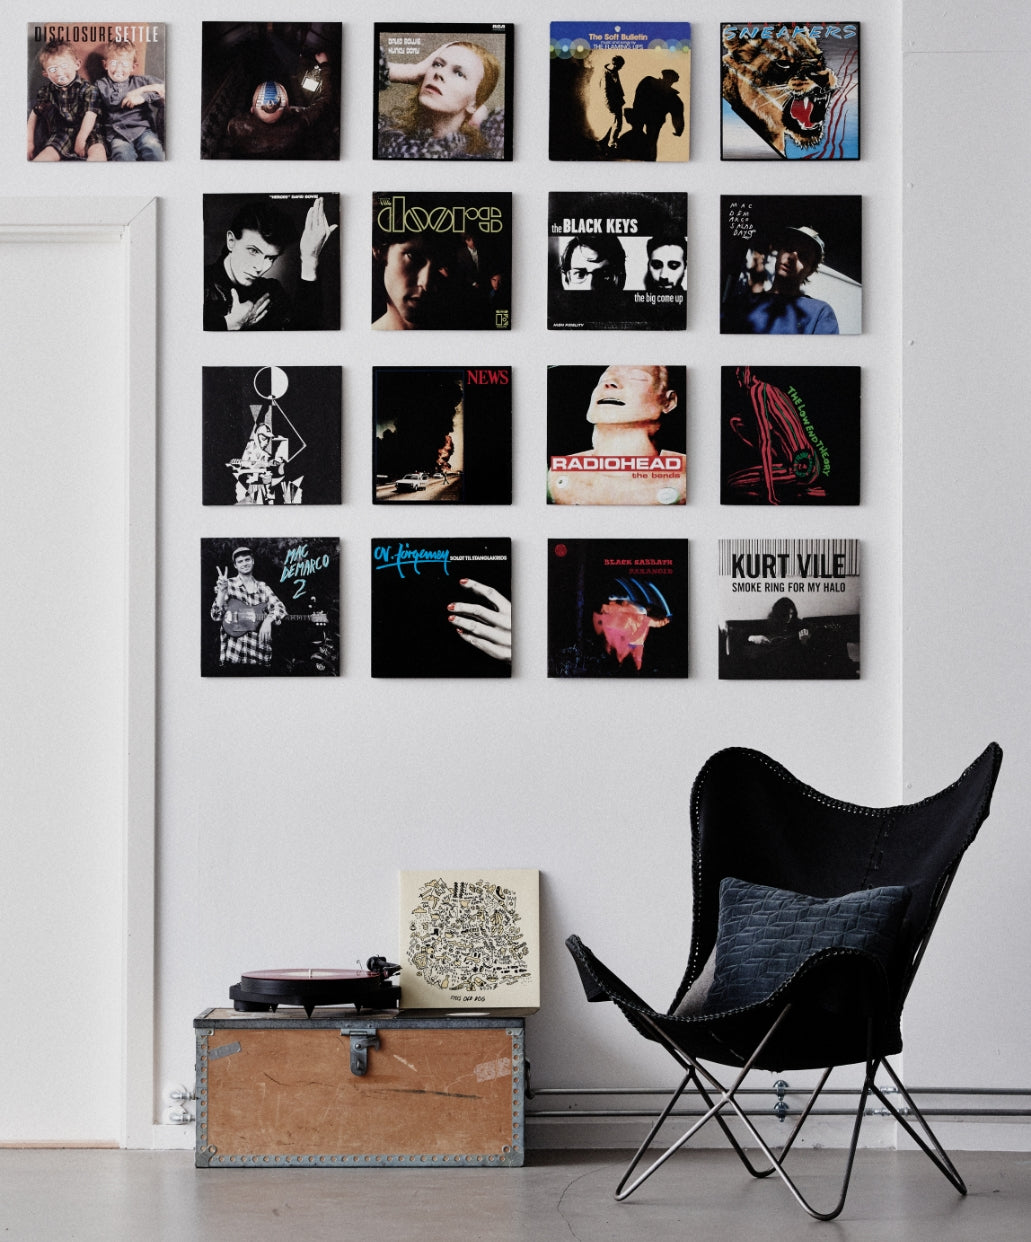 Twelve Inch Original, Vinyl Record Display on the Wall